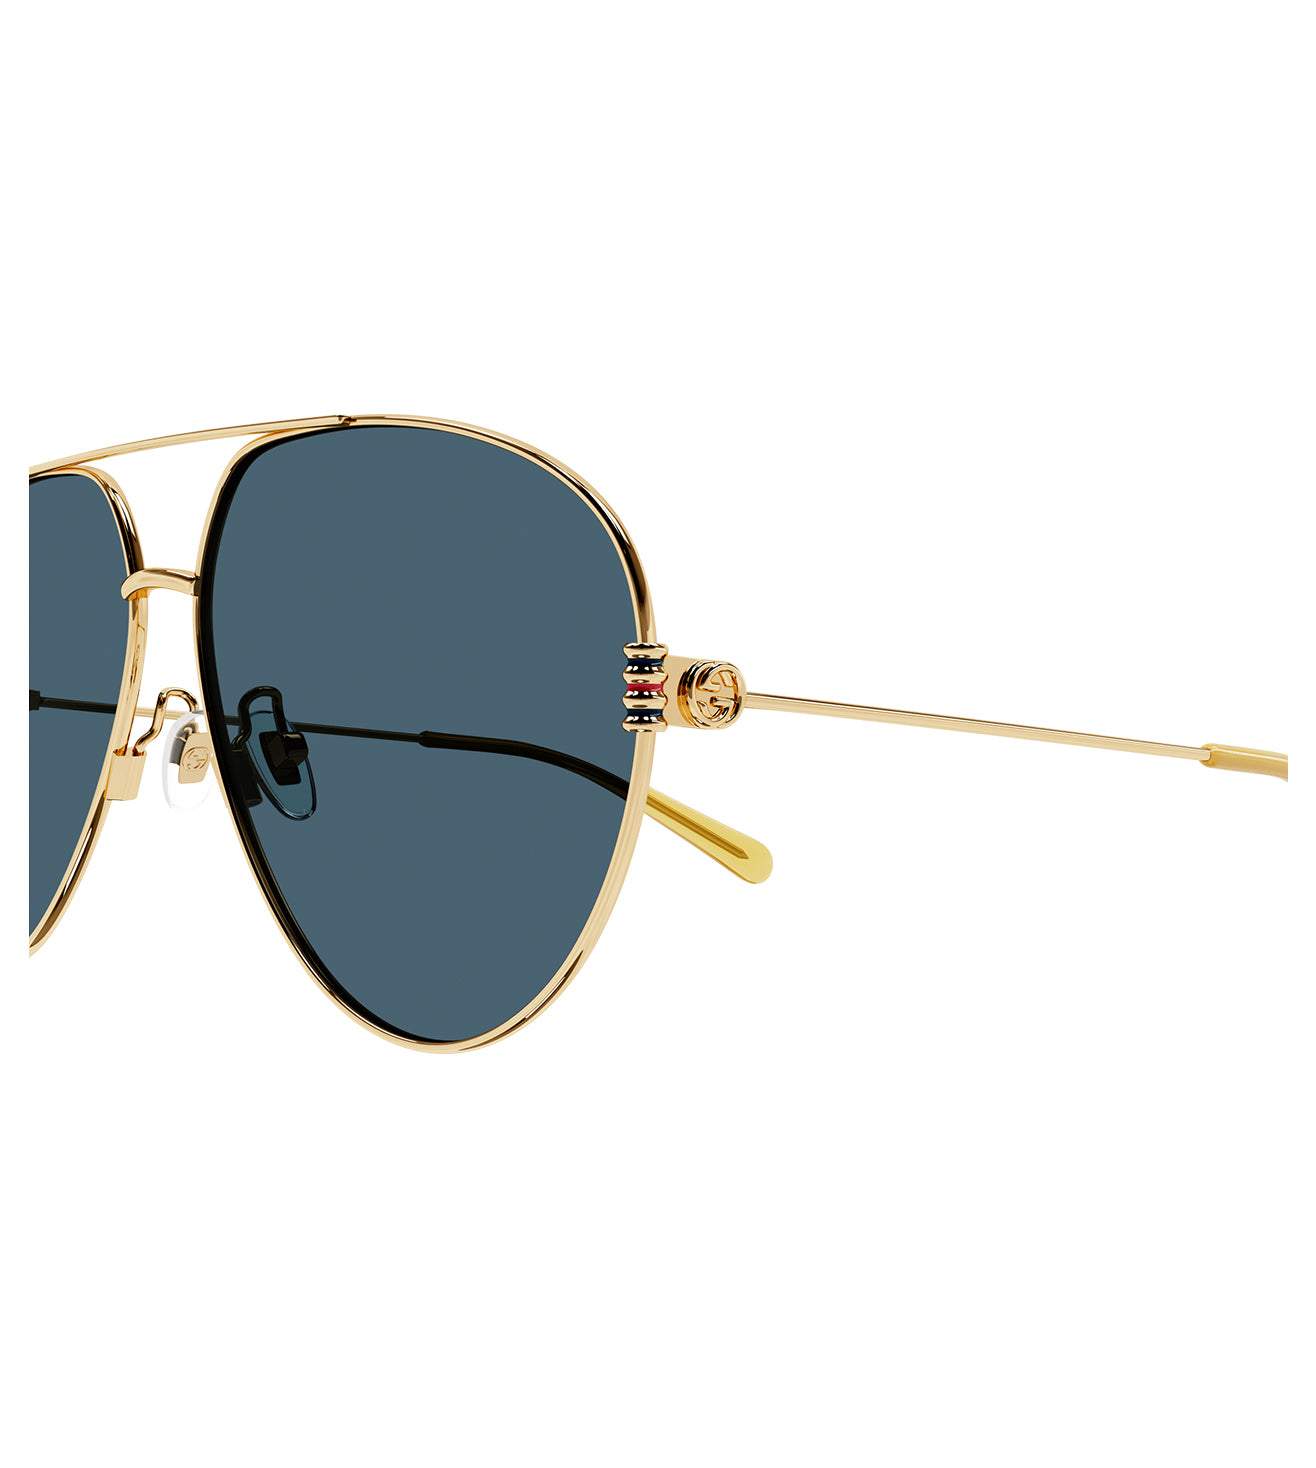 Gucci Women's Blue Aviator Sunglasses